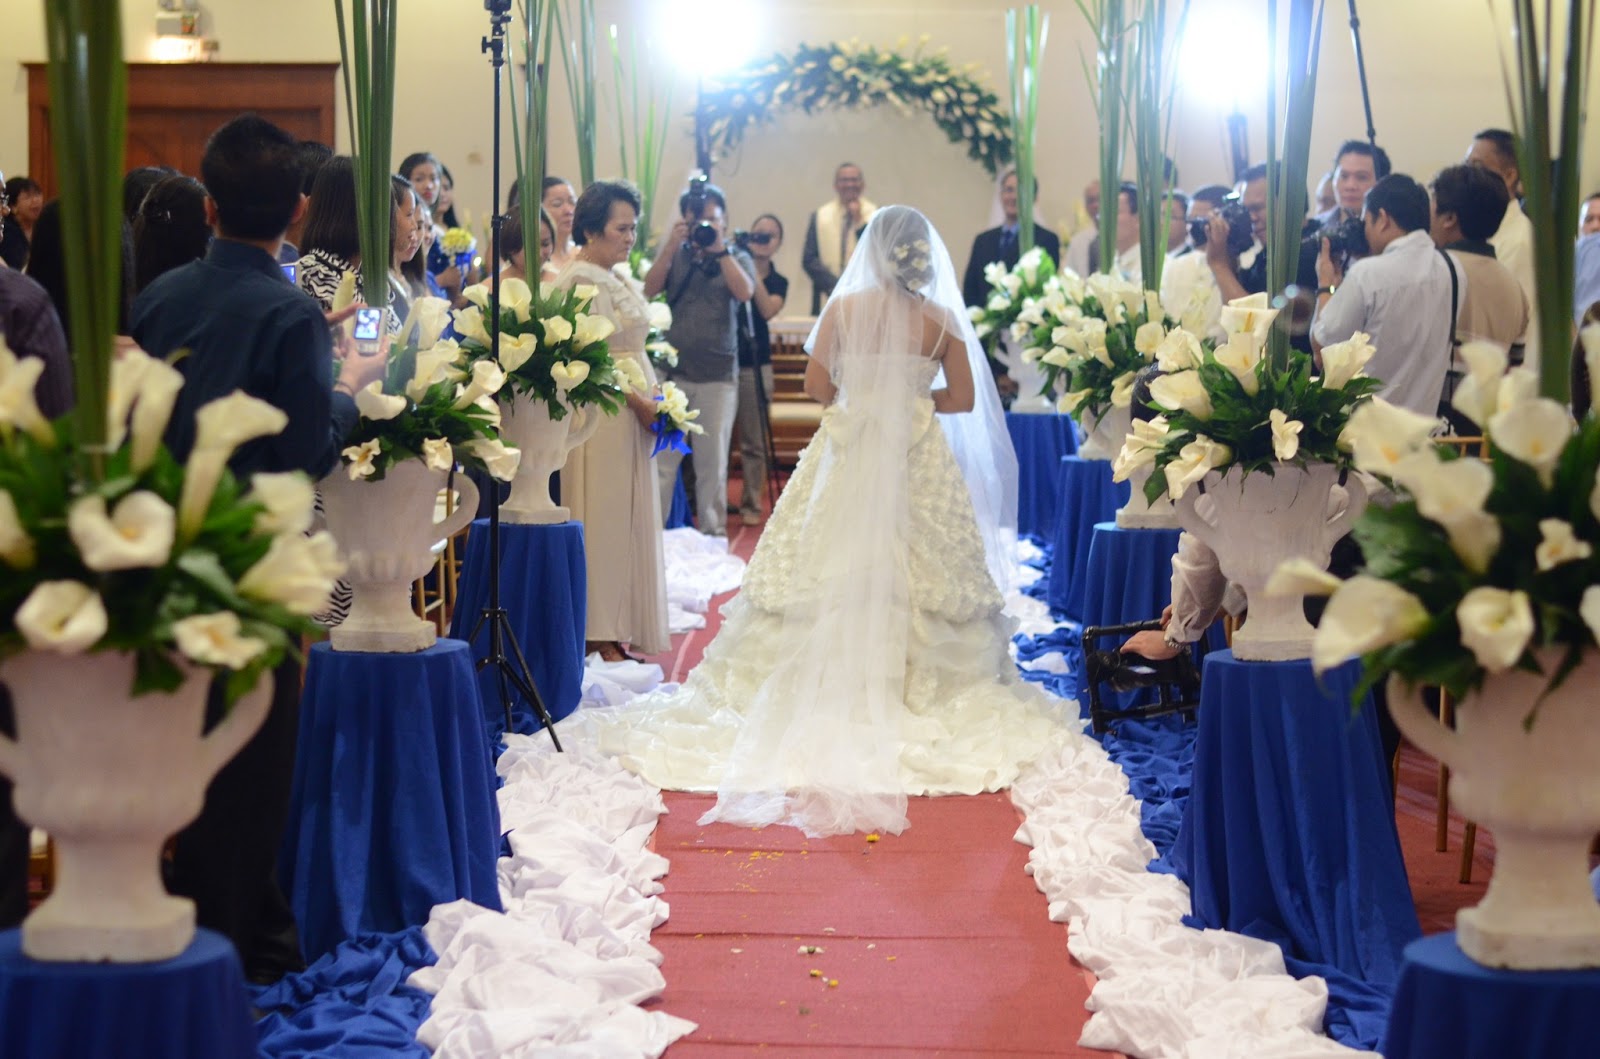 Traditional Filipino Wedding Ceremony Photos Cantik